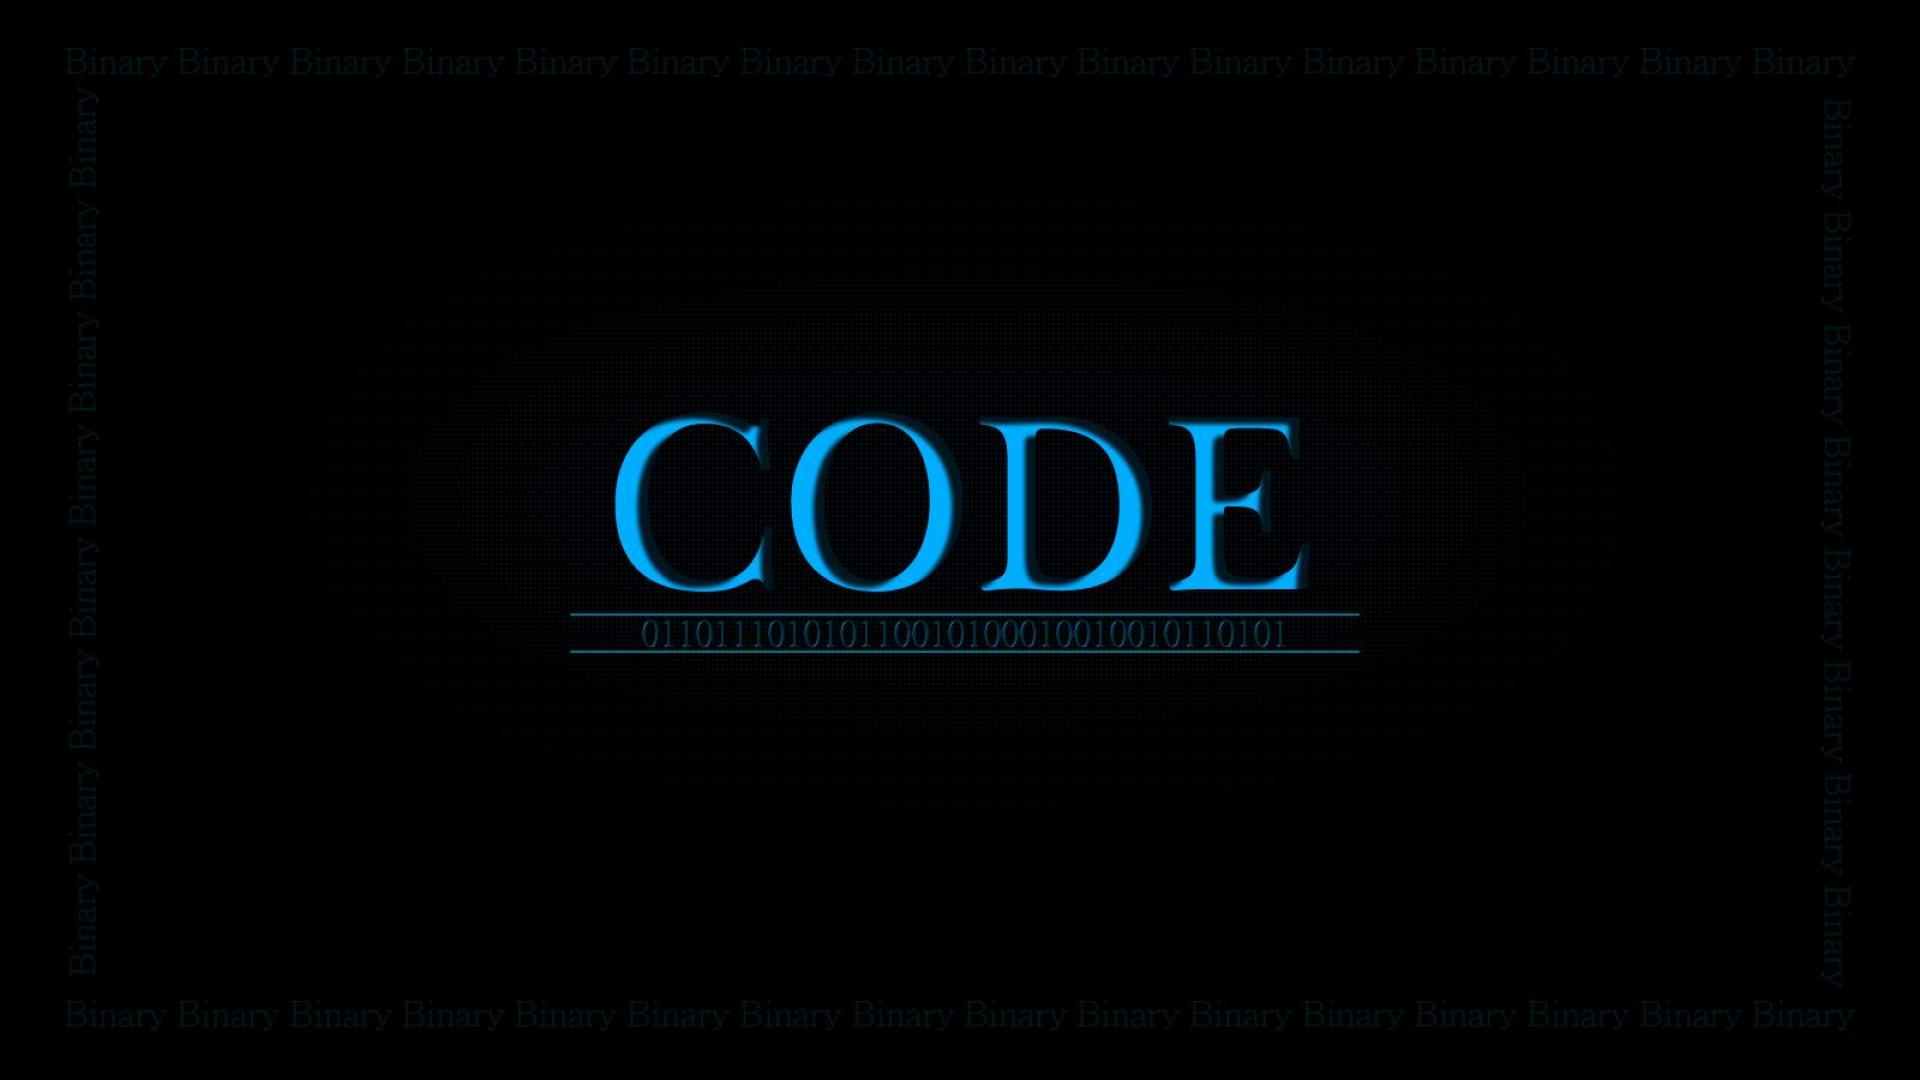 binary code wallpaper - (#55666) - HQ Desktop Wallpapers ...